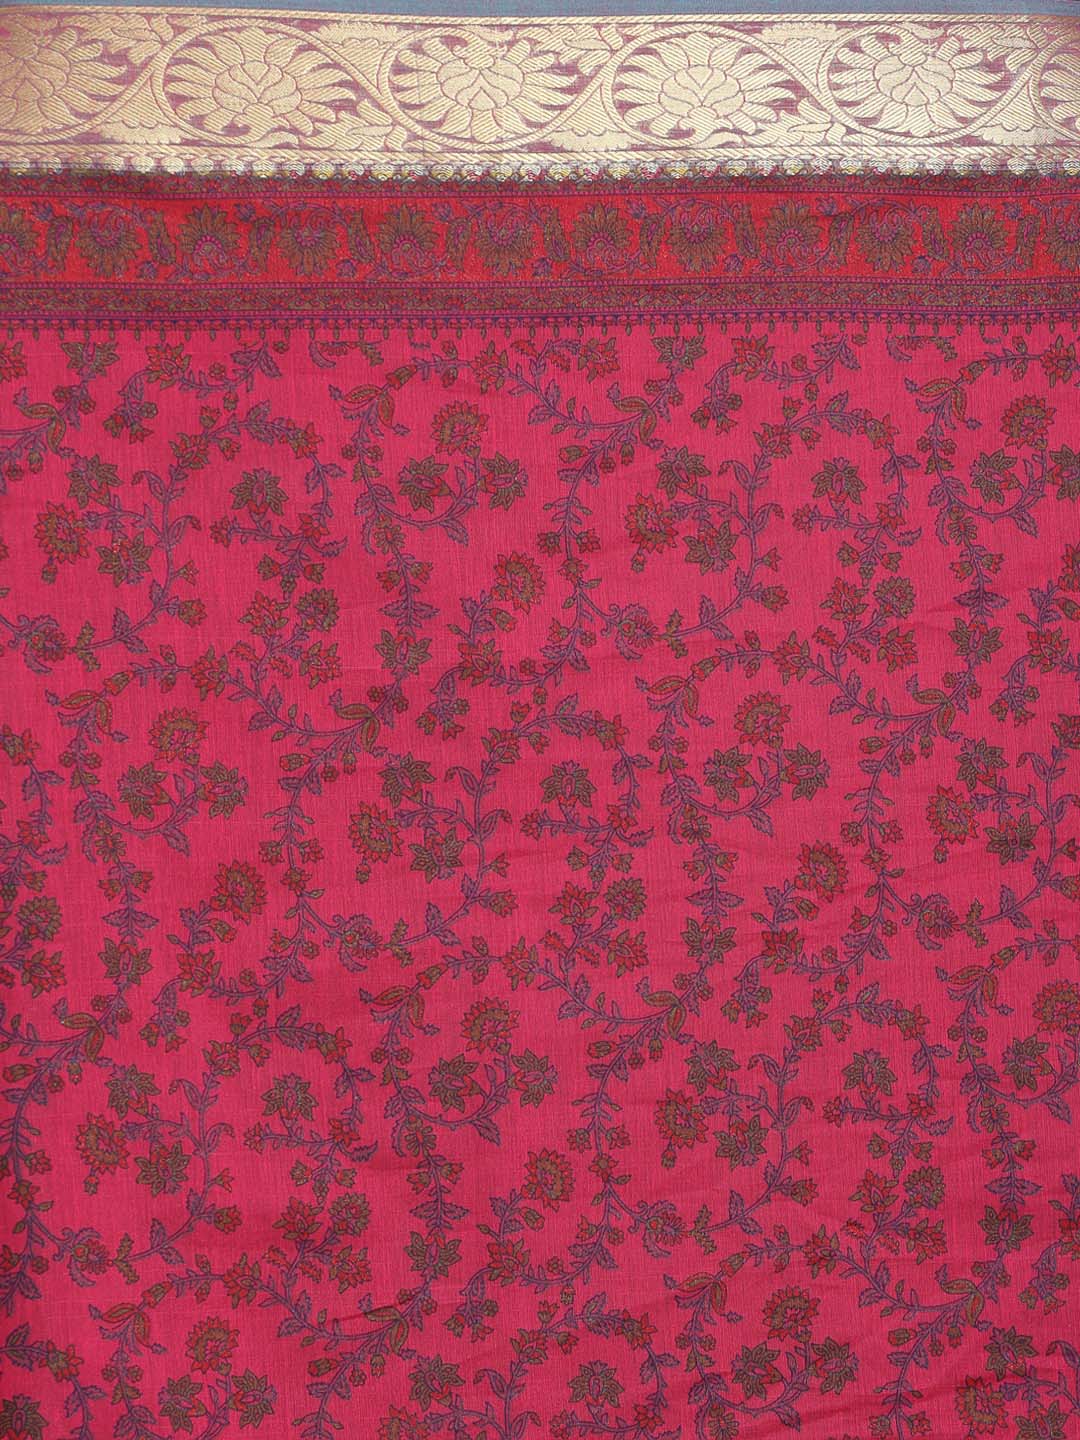 Indethnic Printed Cotton Blend Saree in Magenta - Saree Detail View